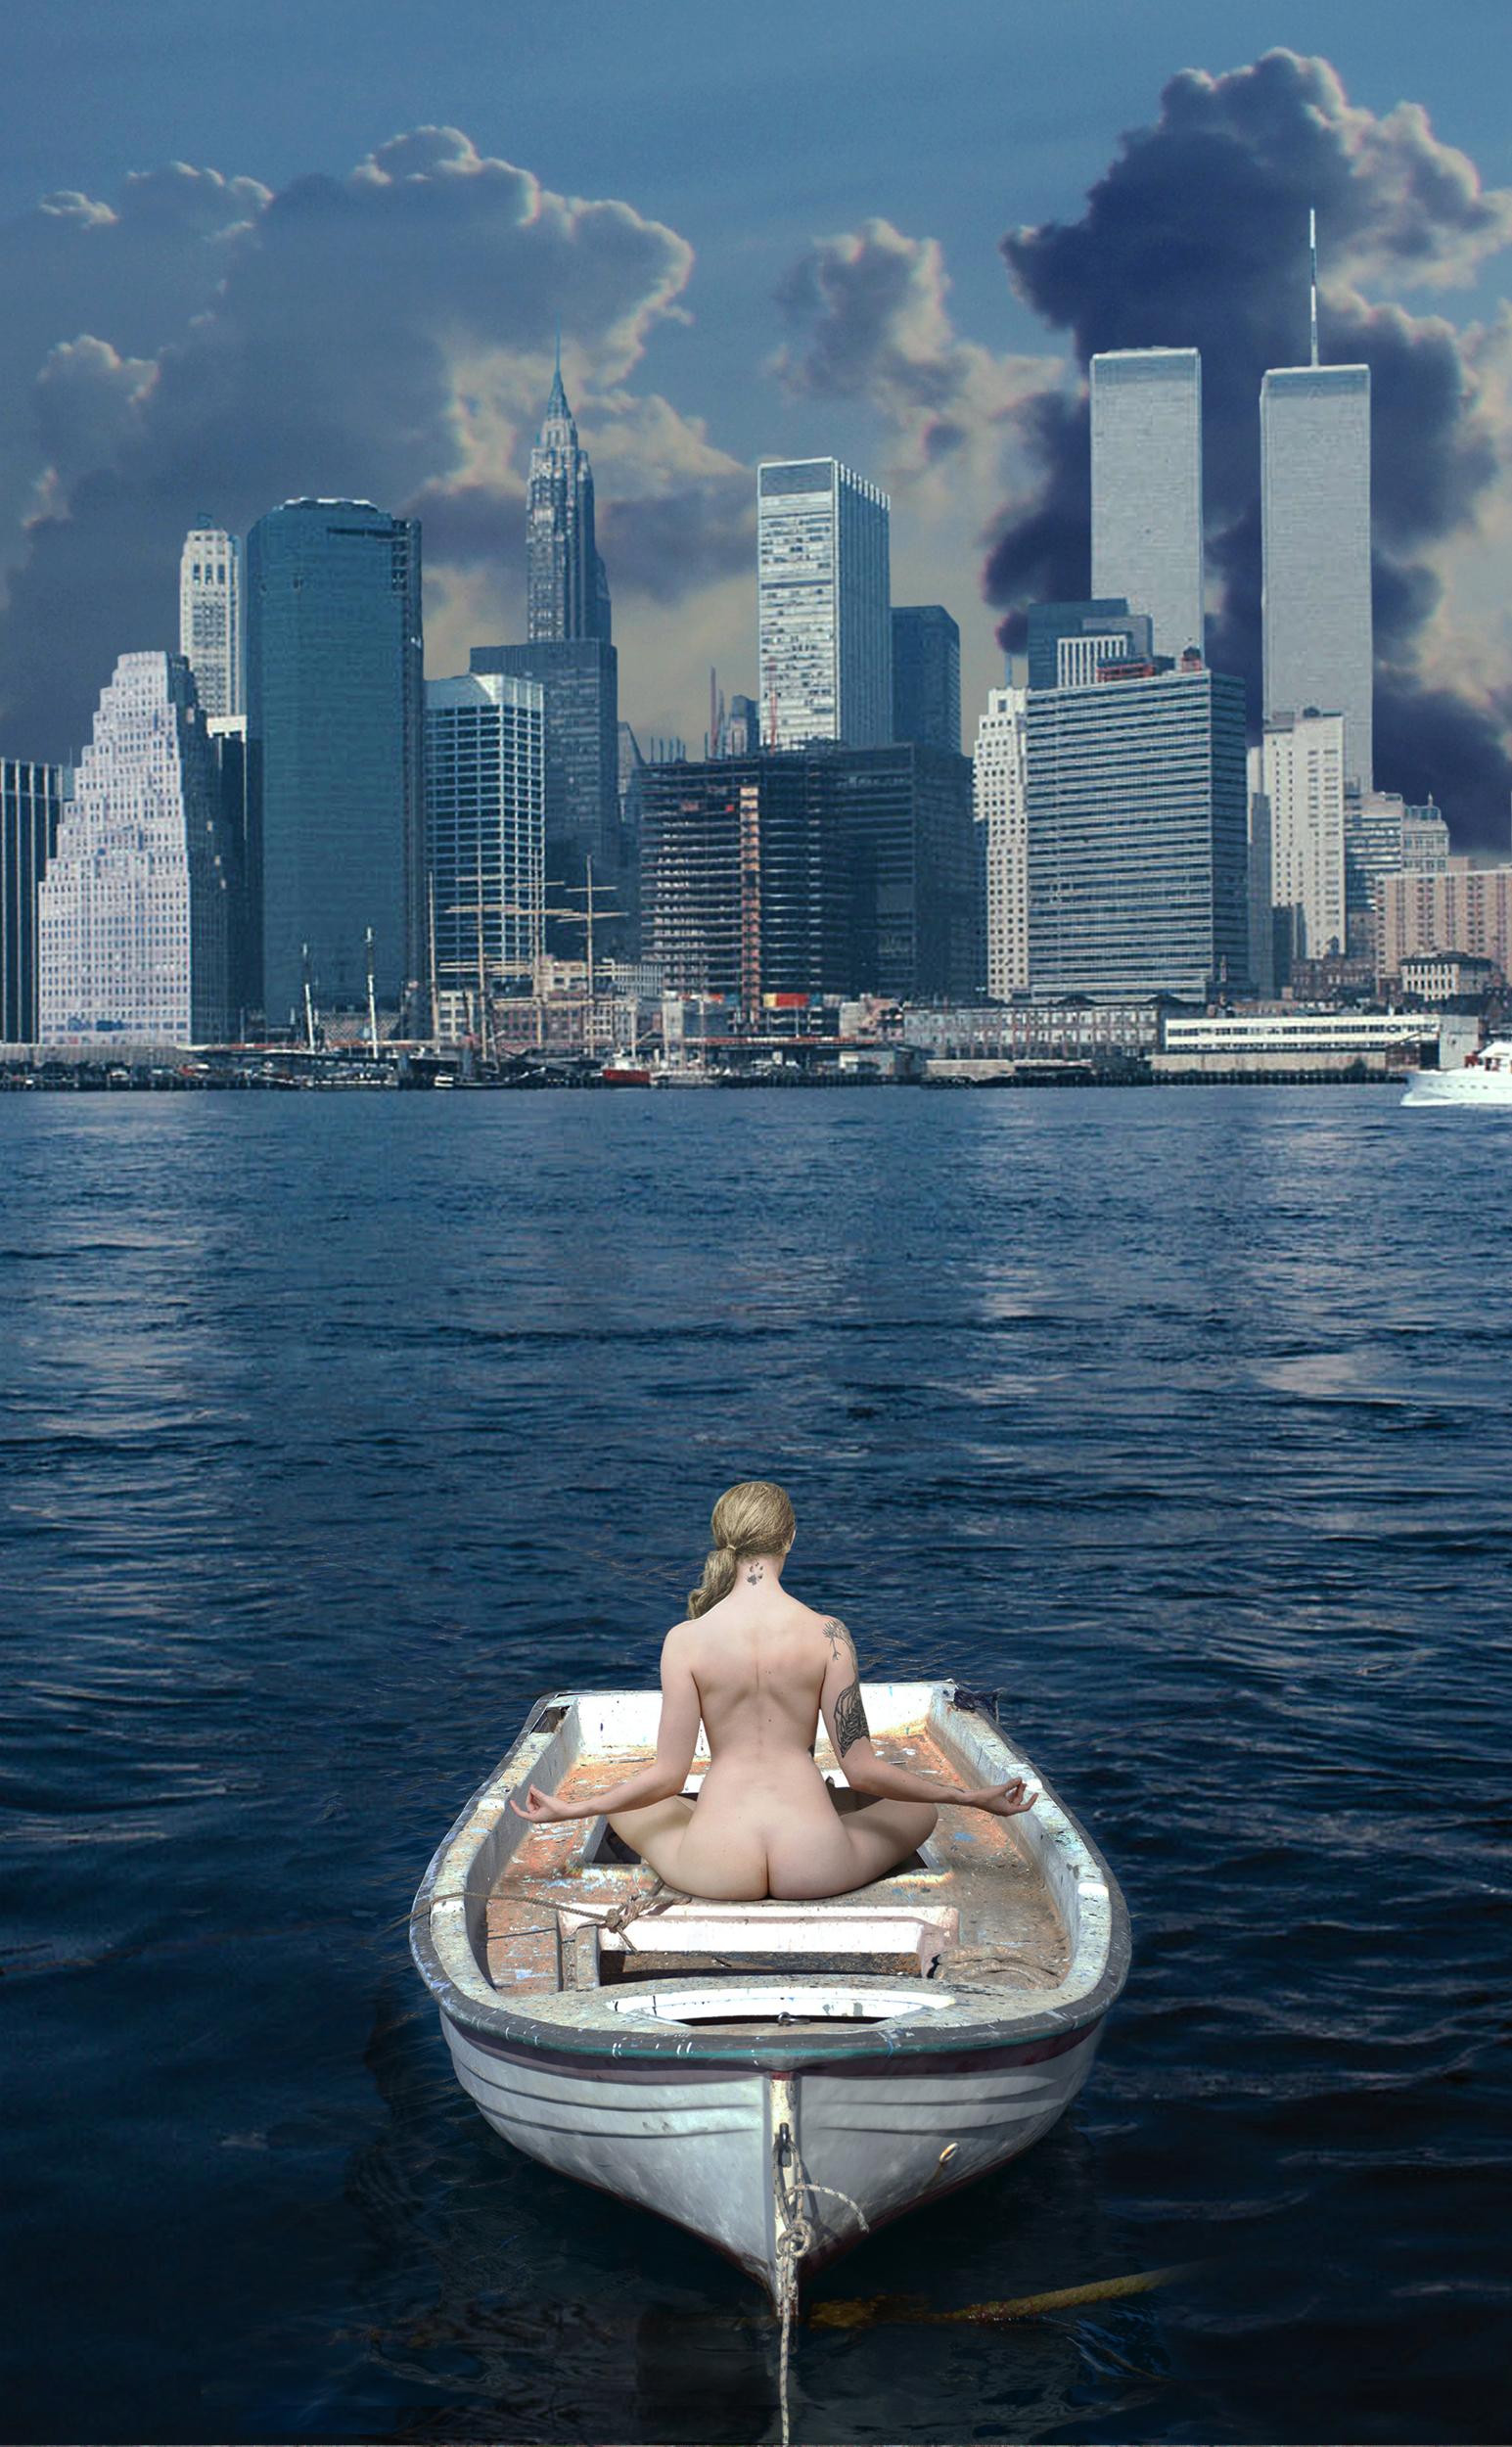 Michael K. Yamaoka  Color Photograph - American Contemporary Photo by M. K. Yamaoka - Premonition of the Apocalypse  